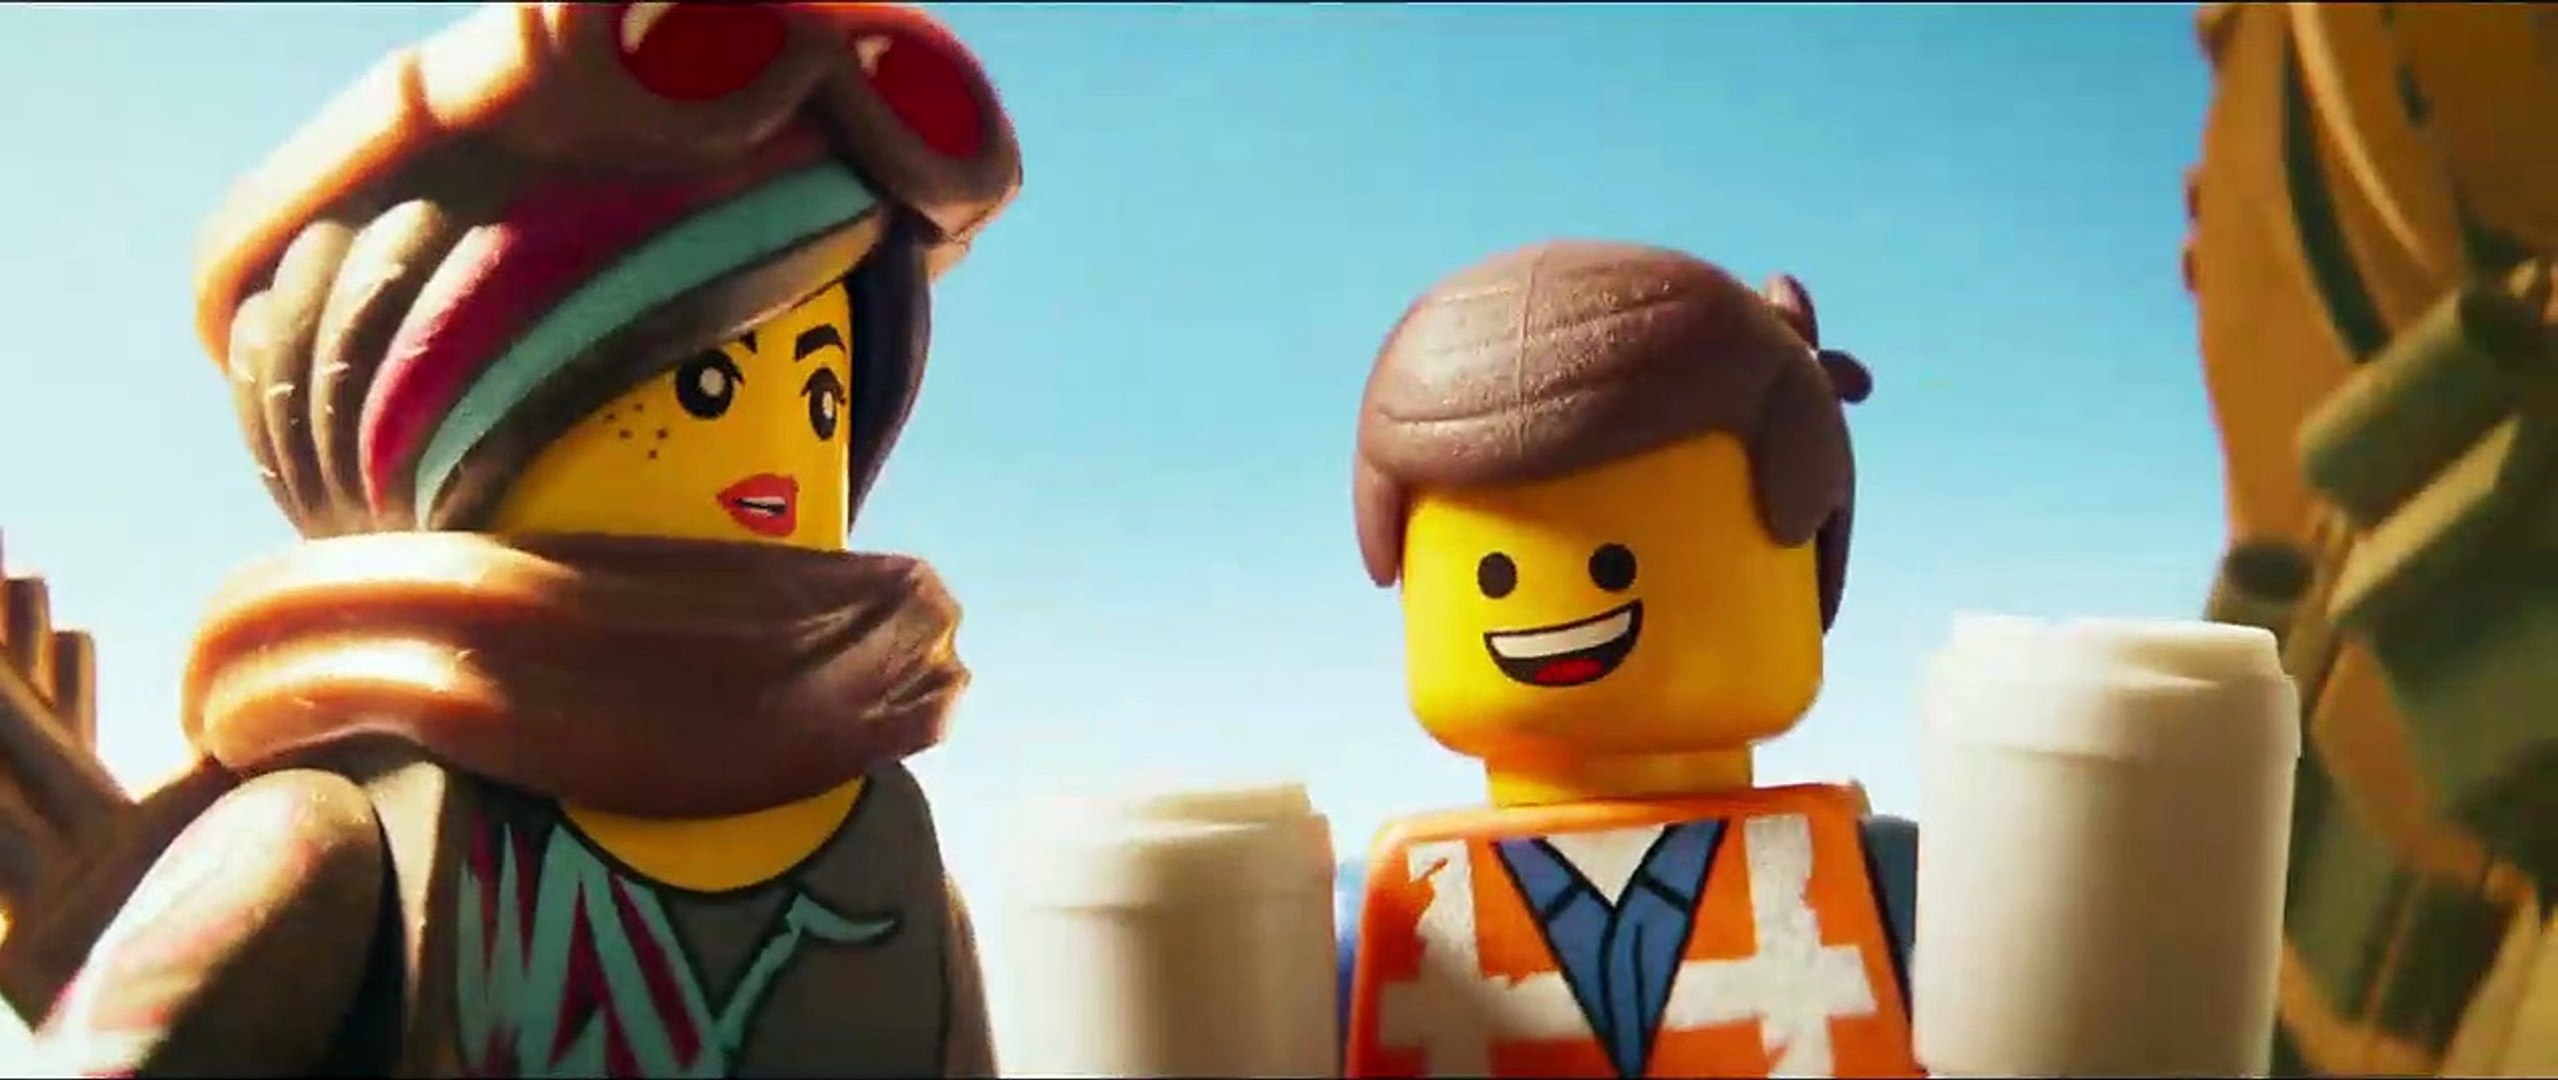 LEGO Filmi 2 Dublajlı Teaser - Dailymotion Video